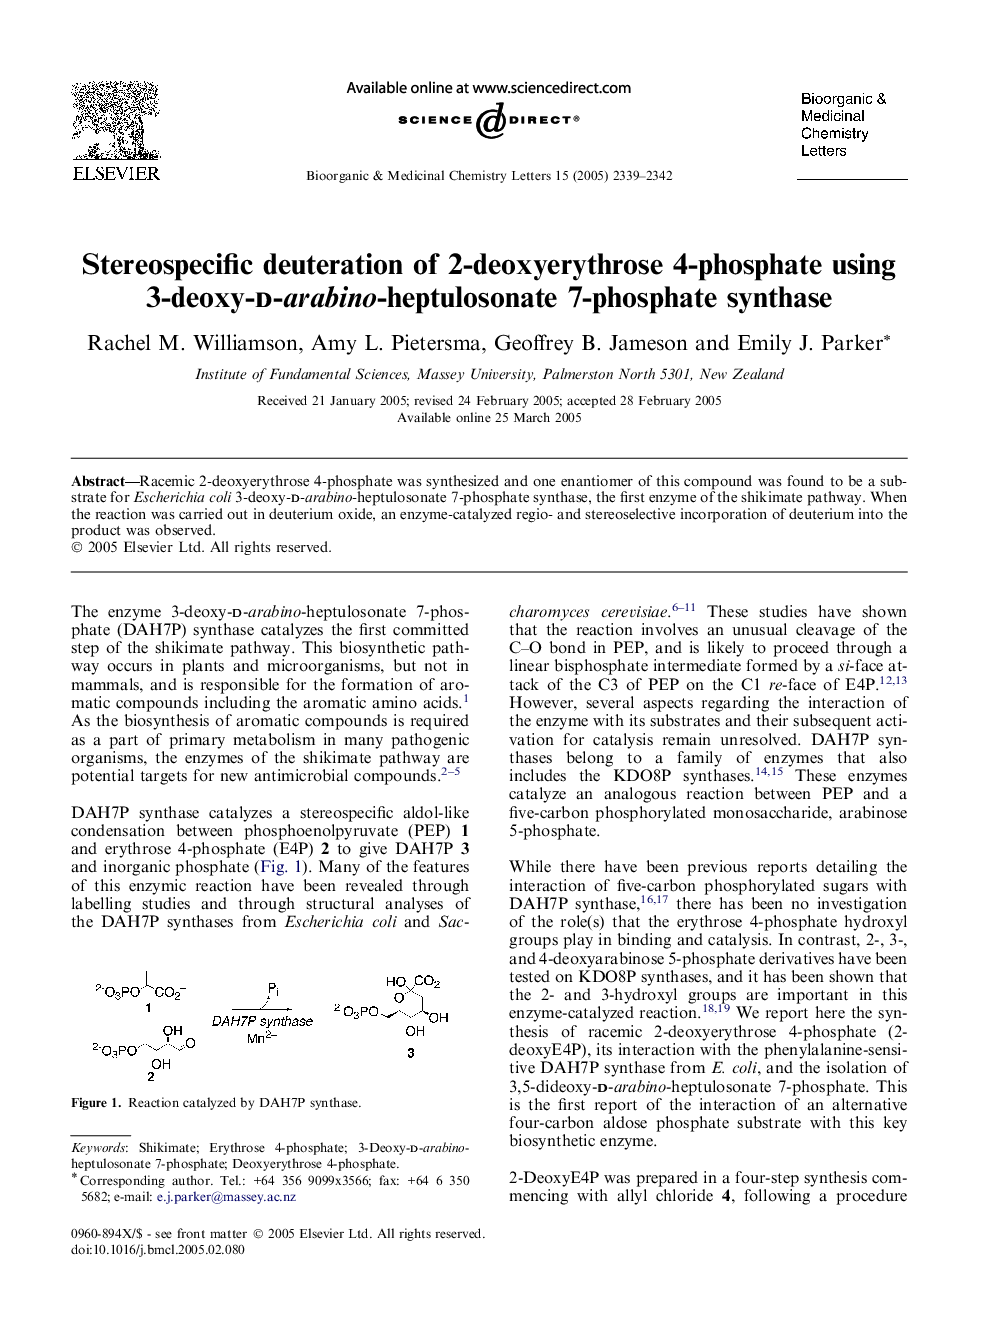 Stereospecific deuteration of 2-deoxyerythrose 4-phosphate using 3-deoxy-D-arabino-heptulosonate 7-phosphate synthase